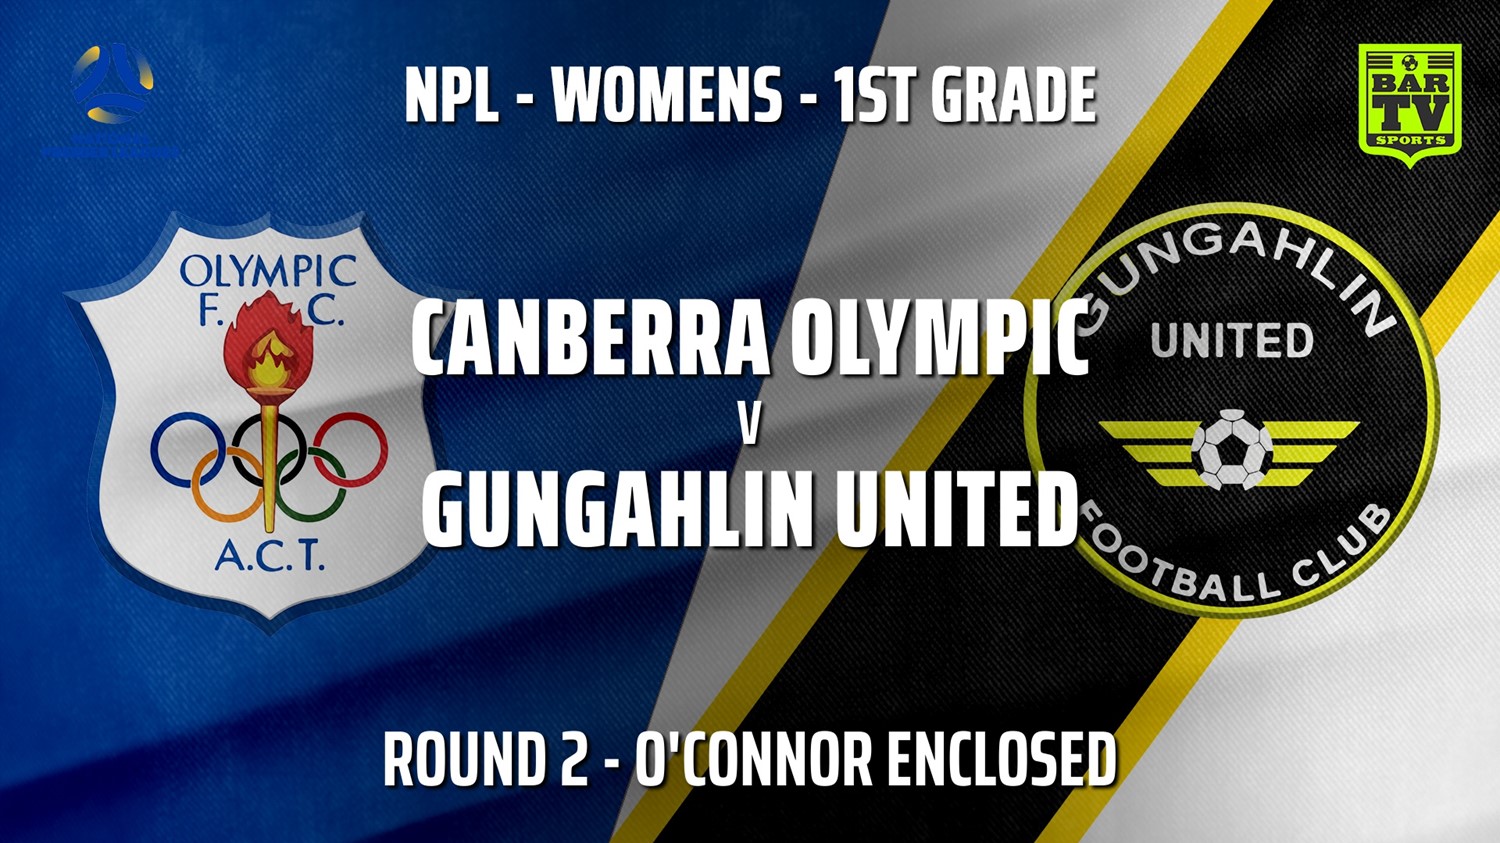 NPLW - Capital Round 2 - Canberra Olympic FC (women) v Gungahlin United FC (women) Minigame Slate Image